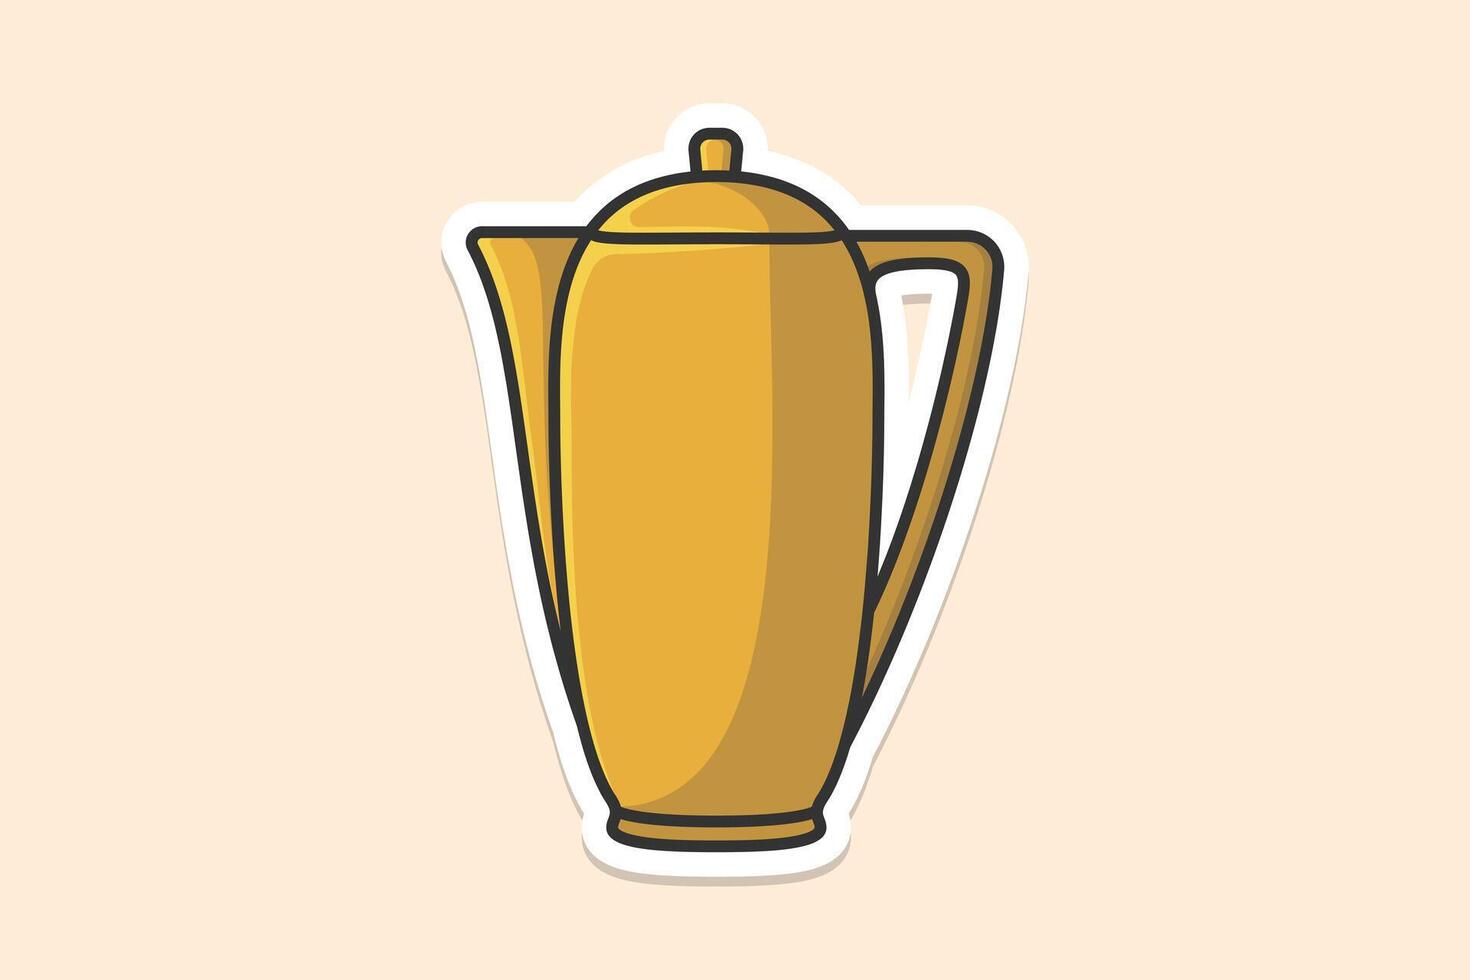 Yellow Teapot sticker design vector illustration. Kitchen interior object icon concept. Breakfast Teapot with closed lid sticker design on blue background. Restaurant kettle icon logo.